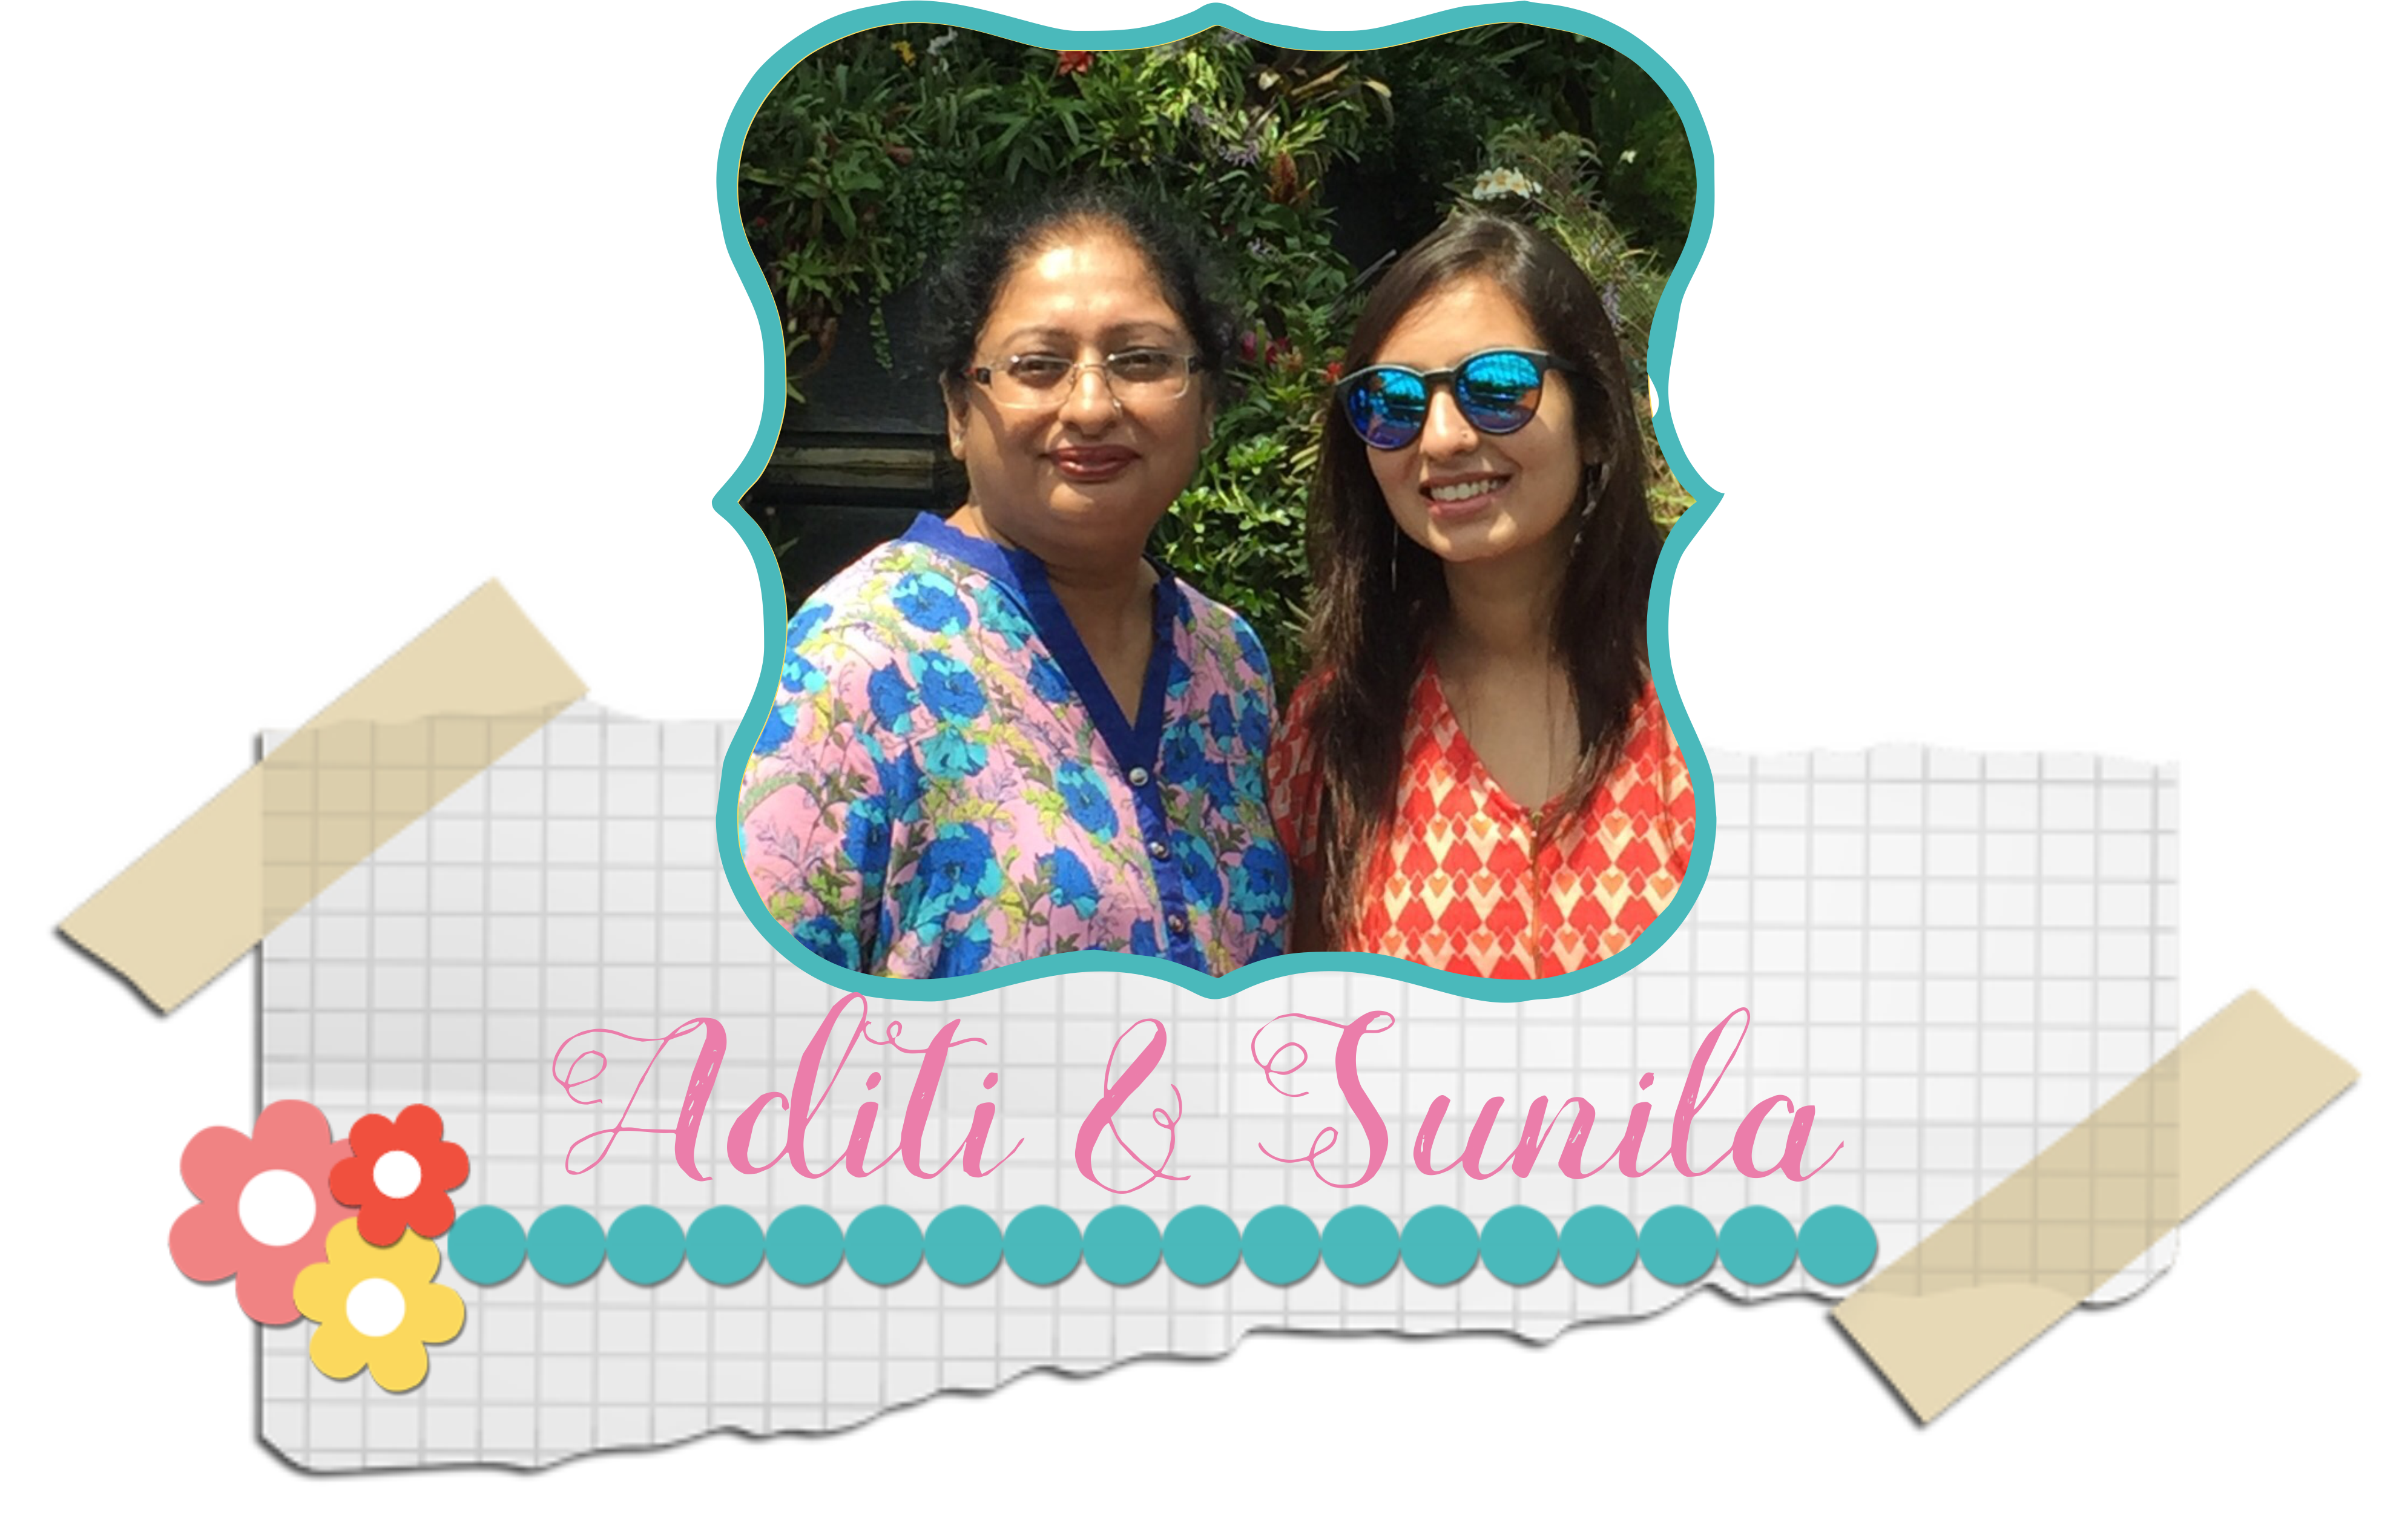 aditi and sunila